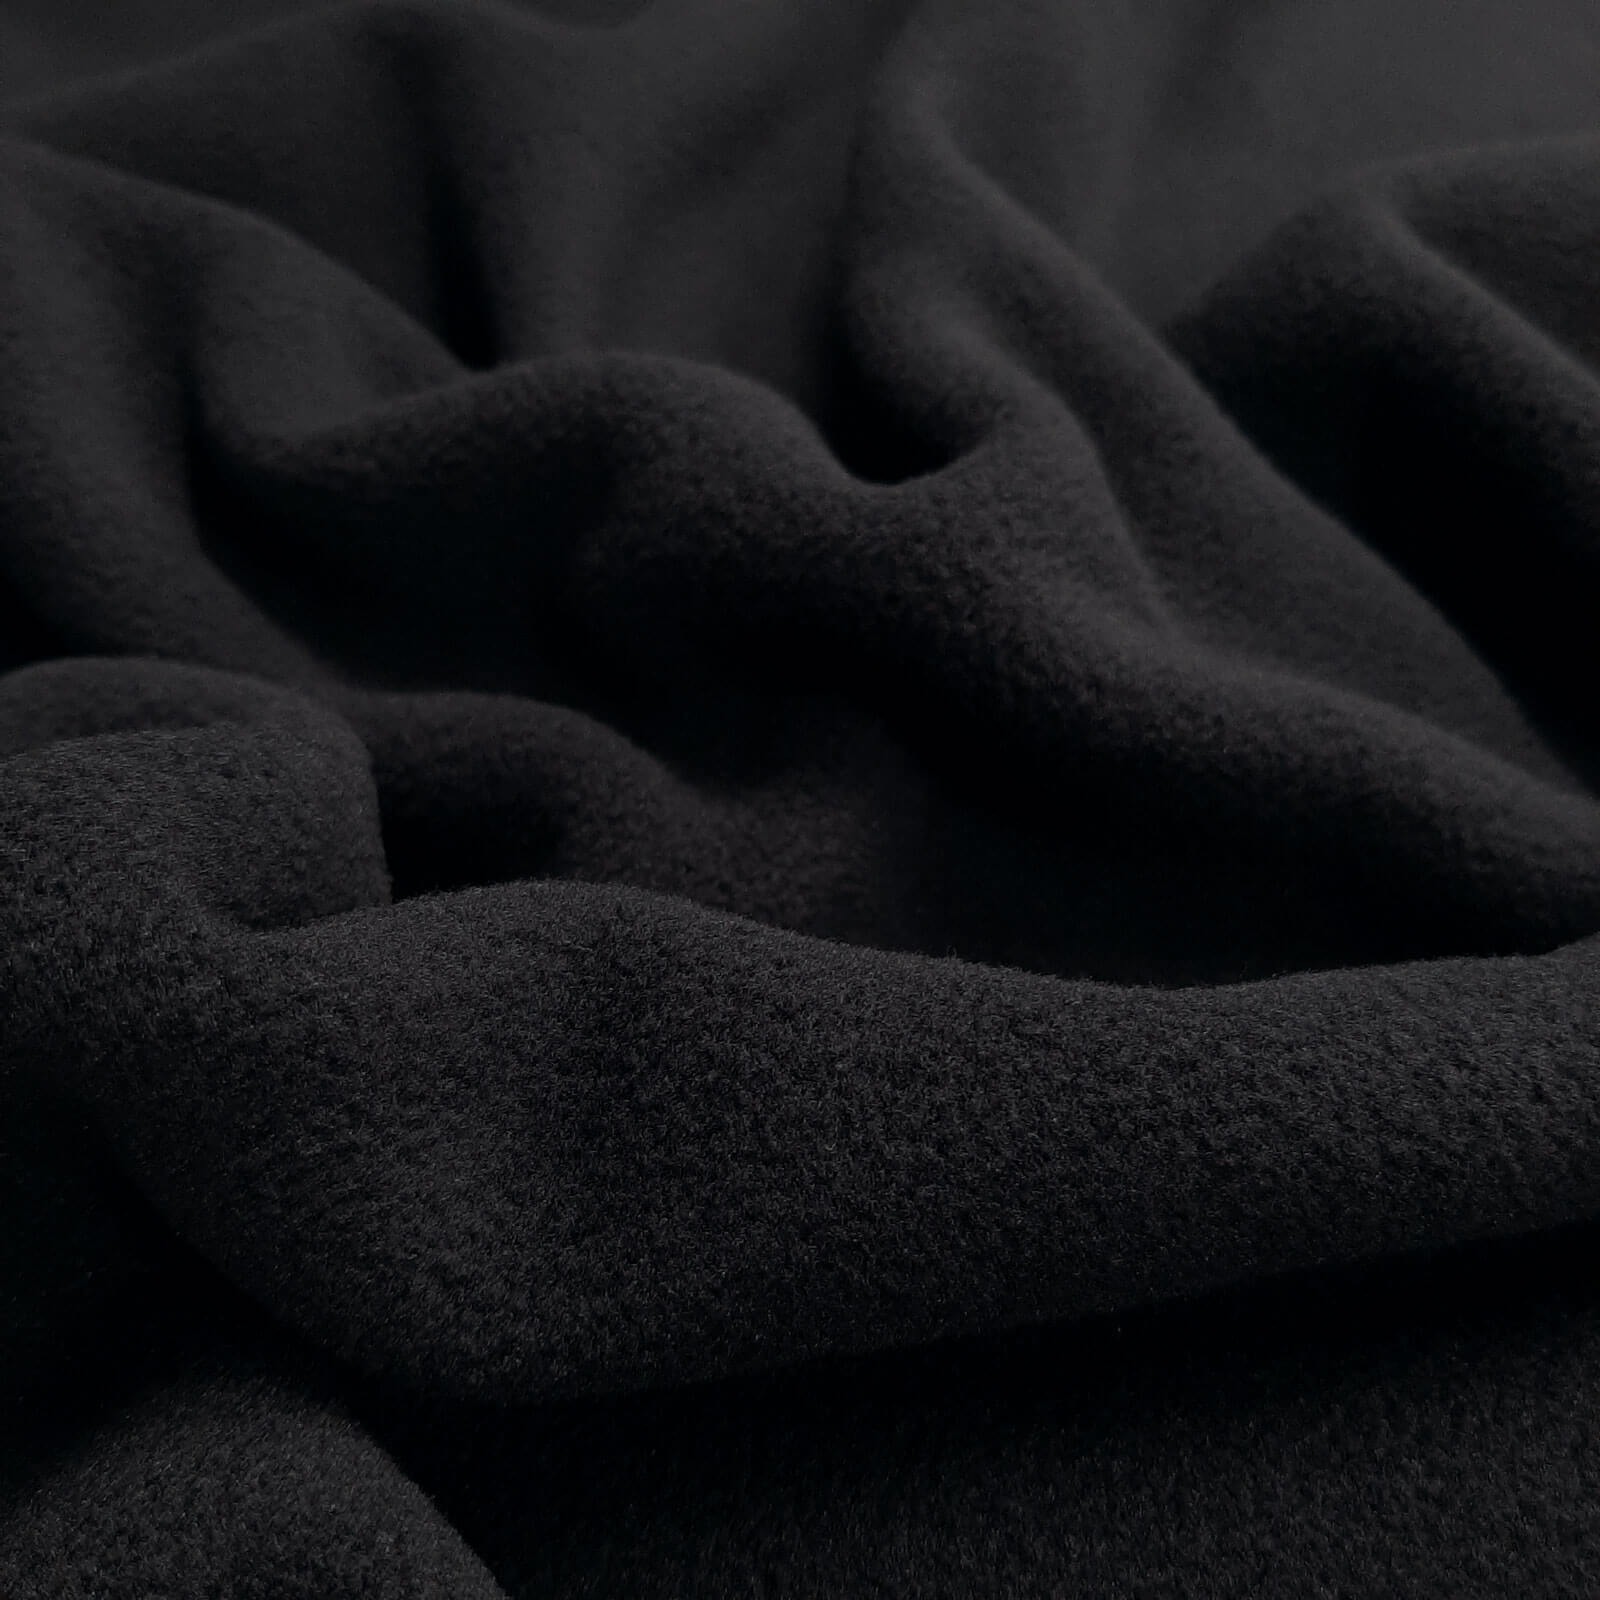 Imera - 300 Polartec® Fleece - Black